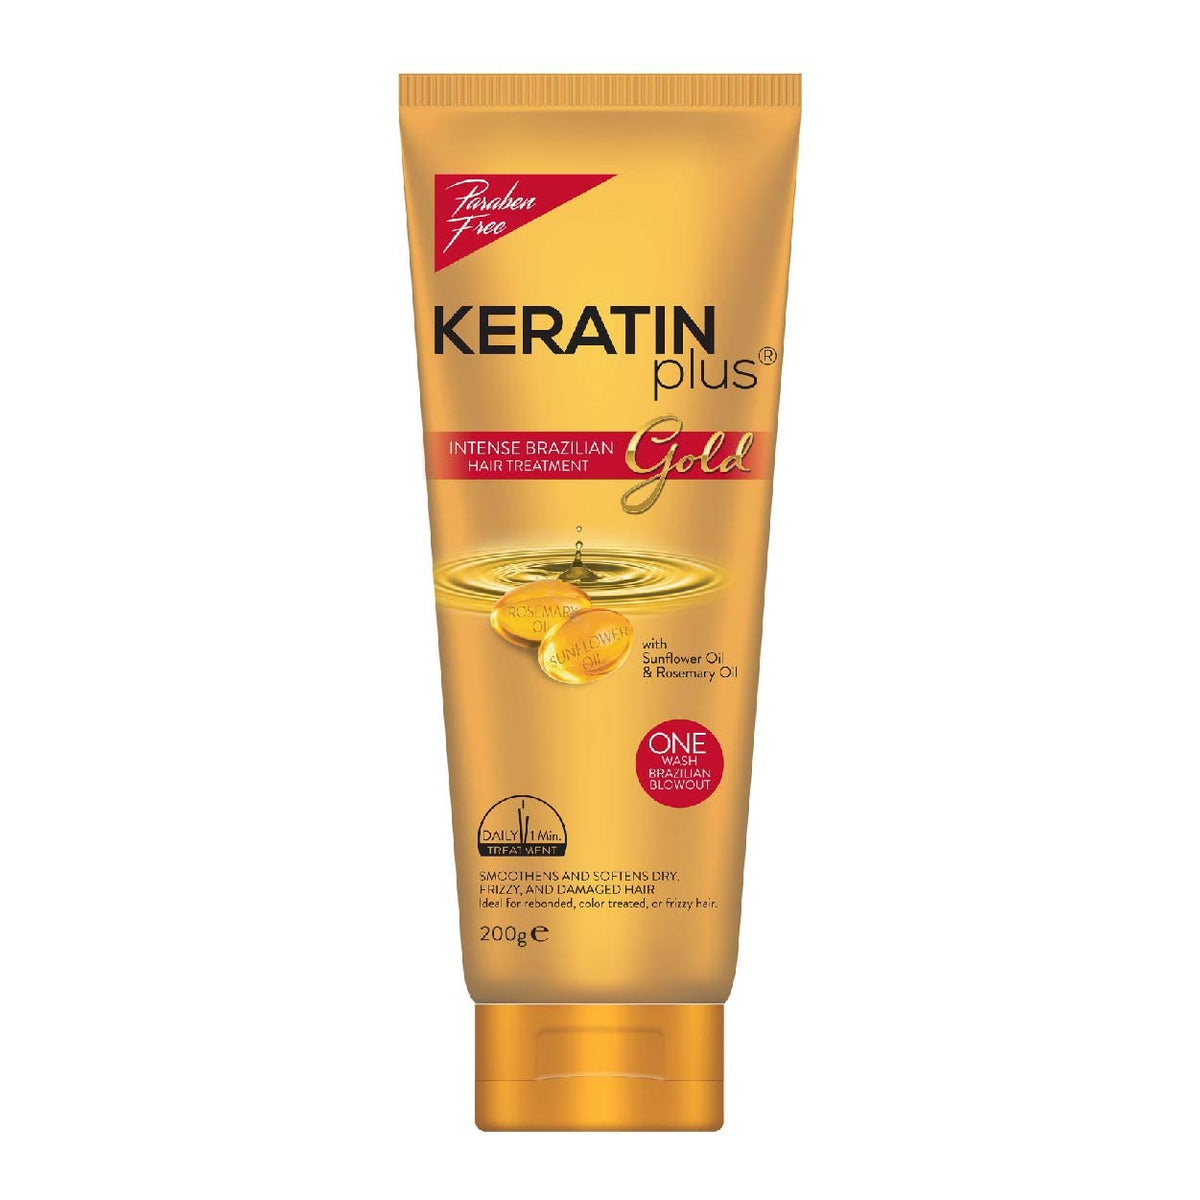 Keratin Plus Intense Brazilian Hair Treatment Gold 200g